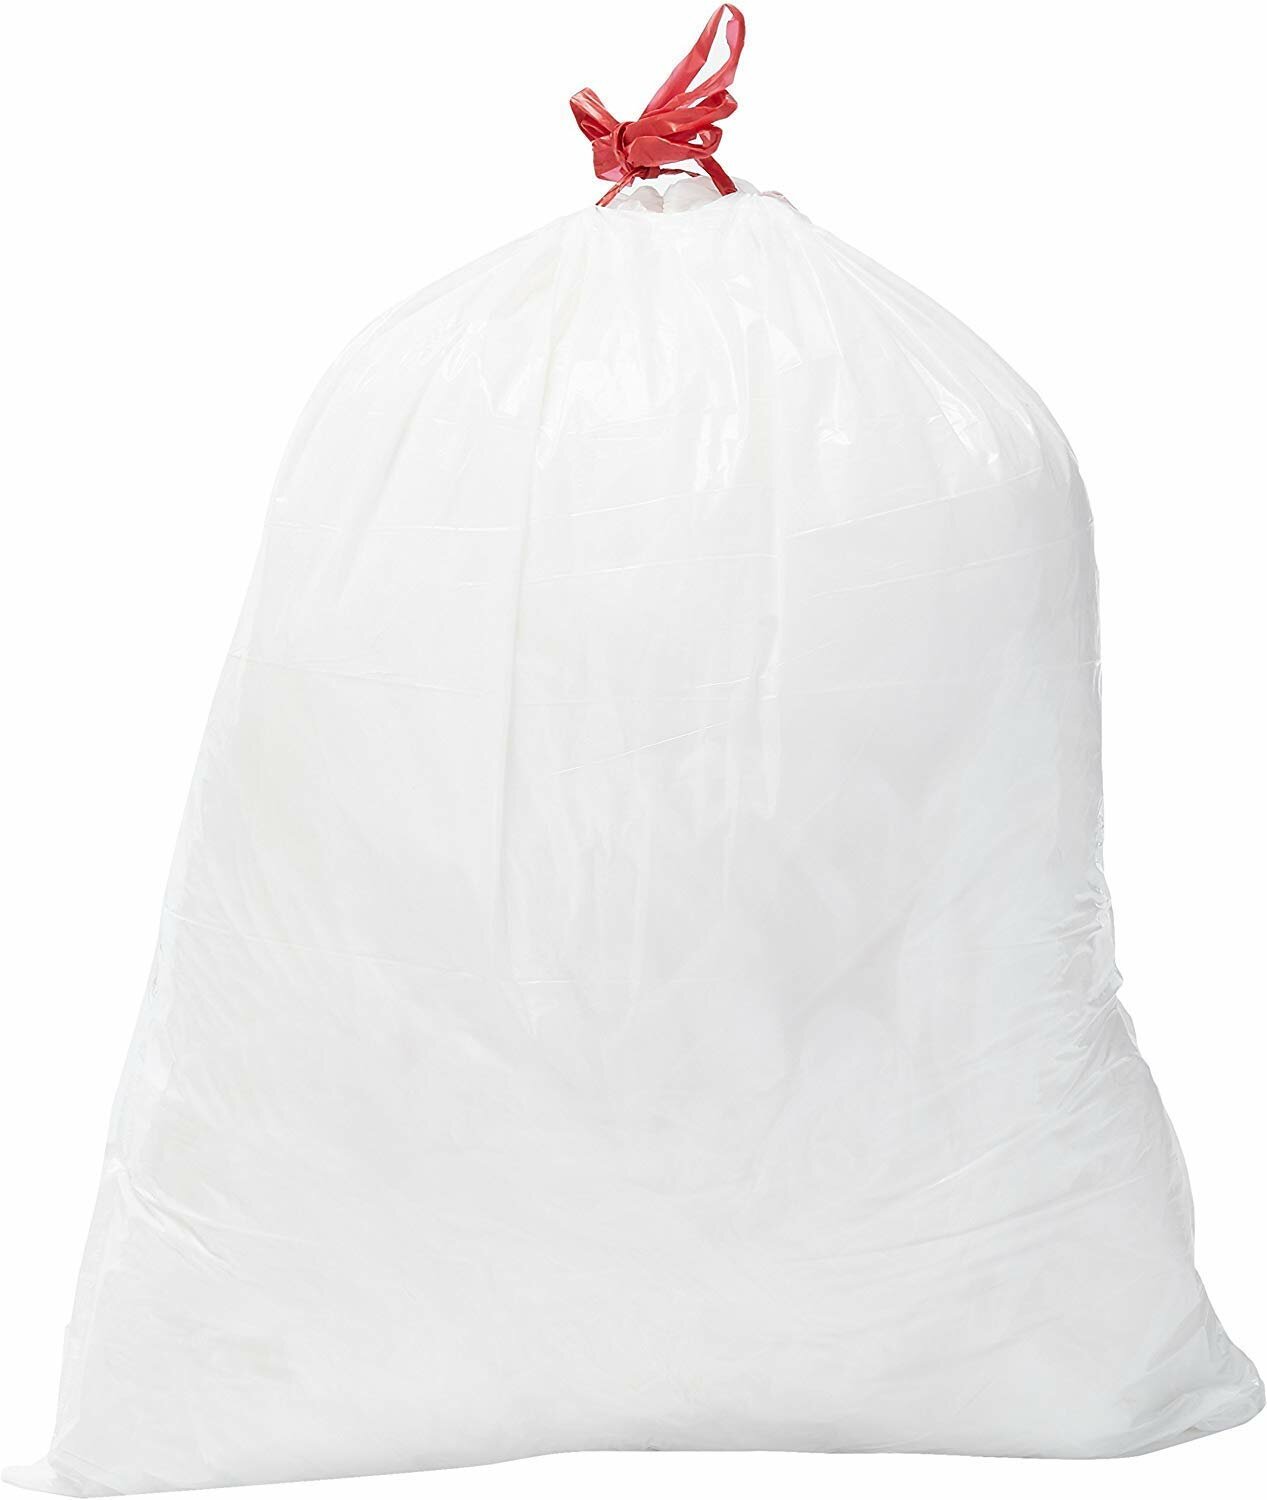 13 Gallons Polyethylene Plastic Trash Bags - 100 Count